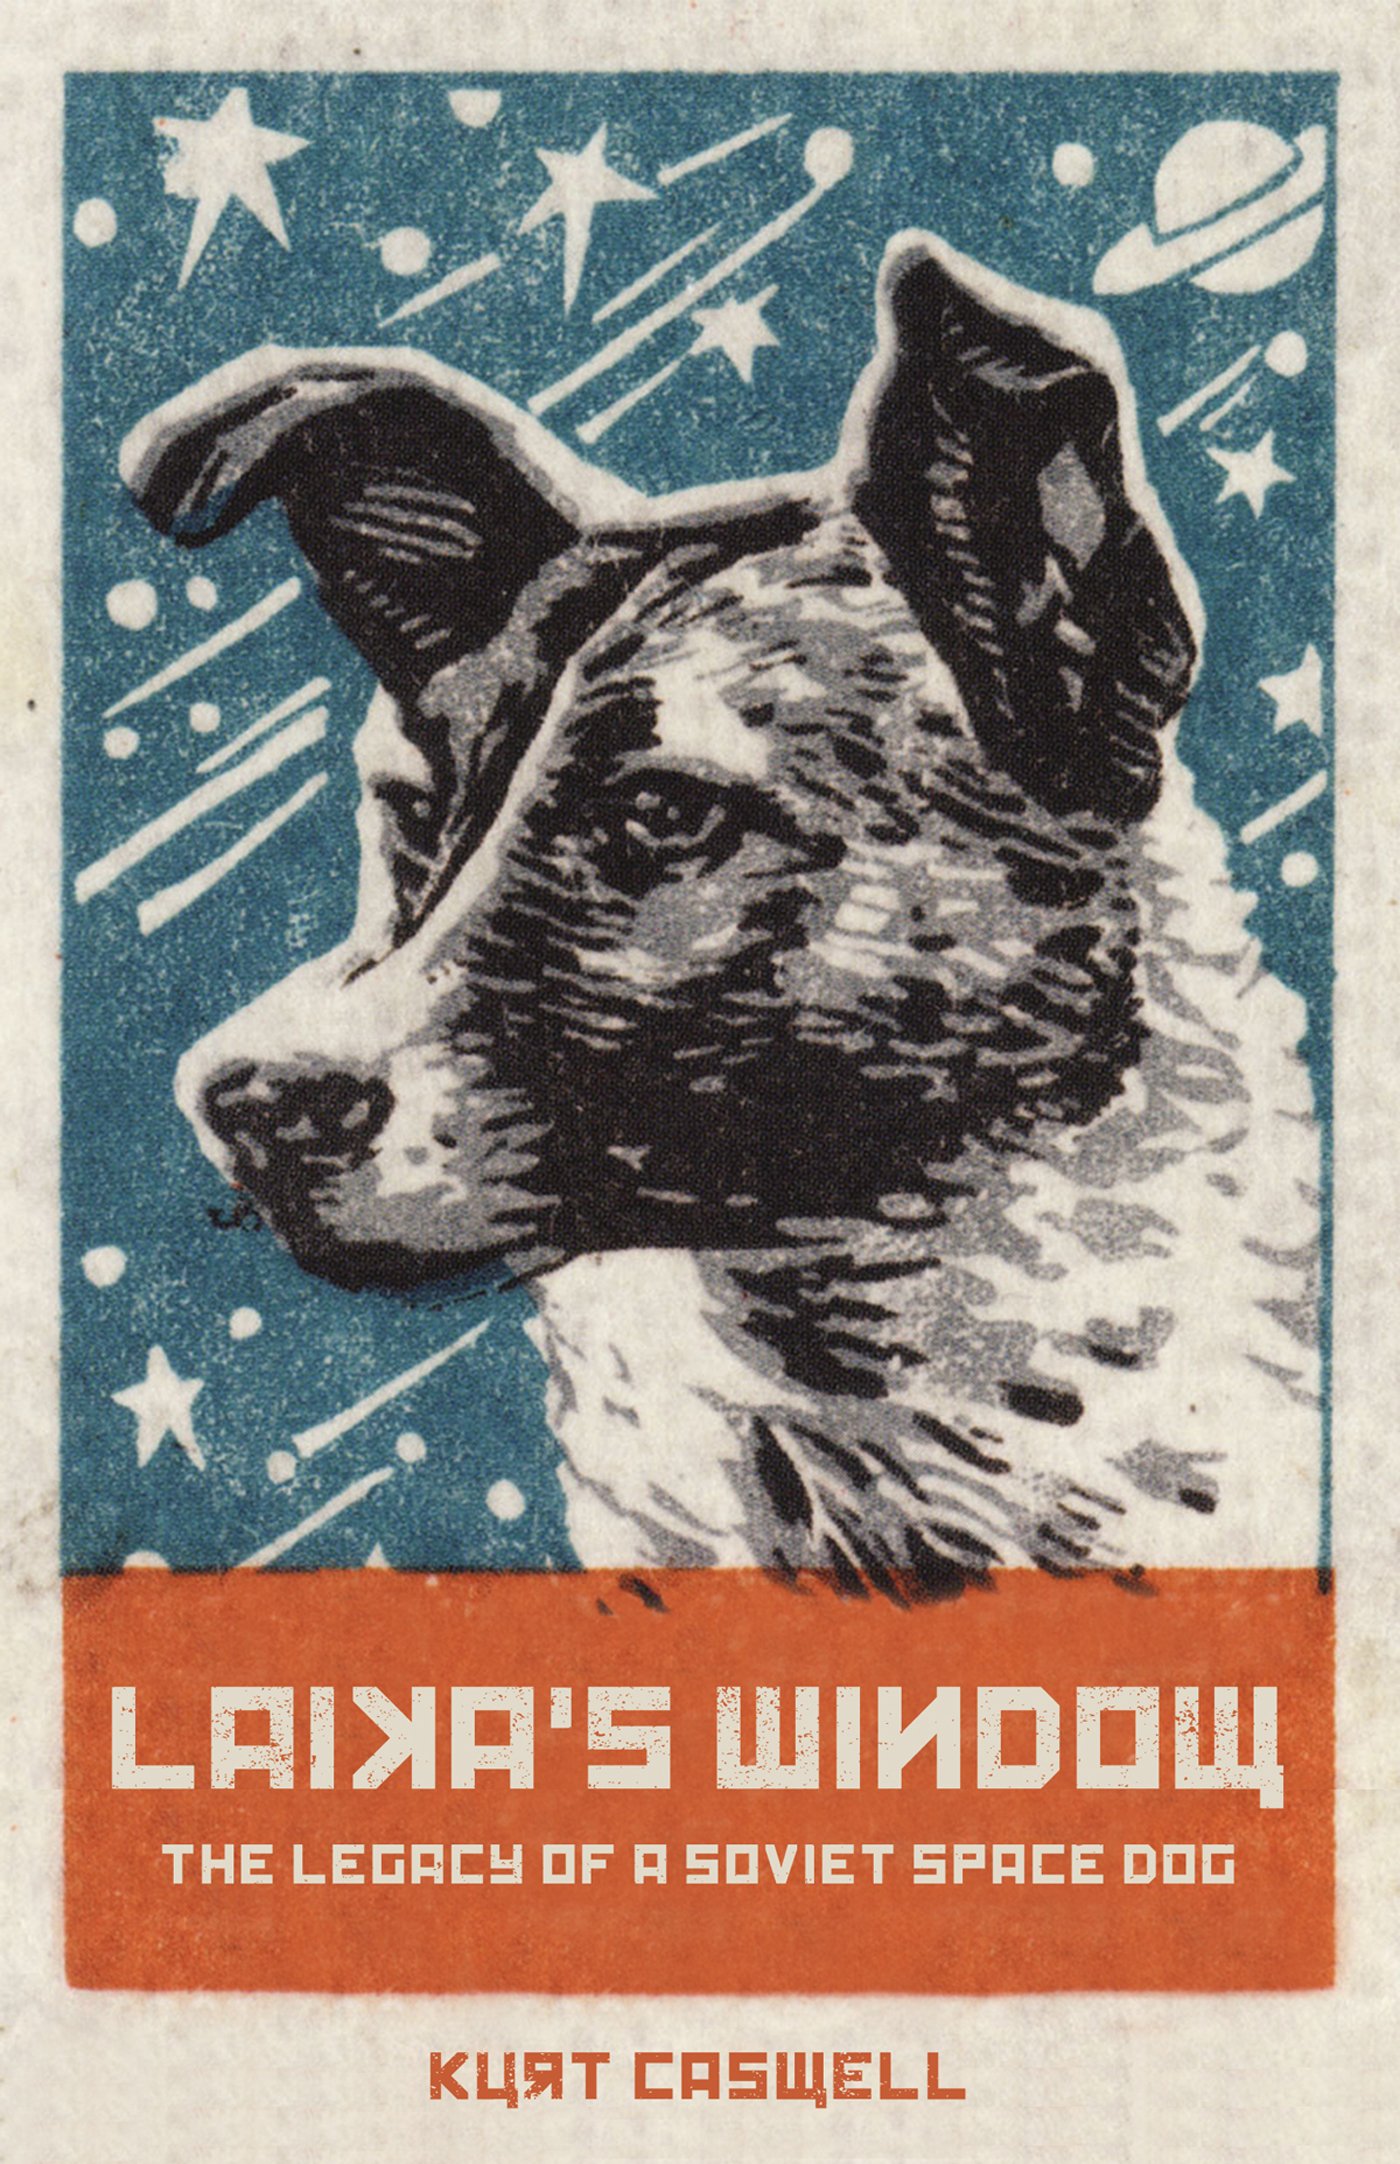 Laikas-Window-The-Legacy-of-a-Soviet-Space-Dog